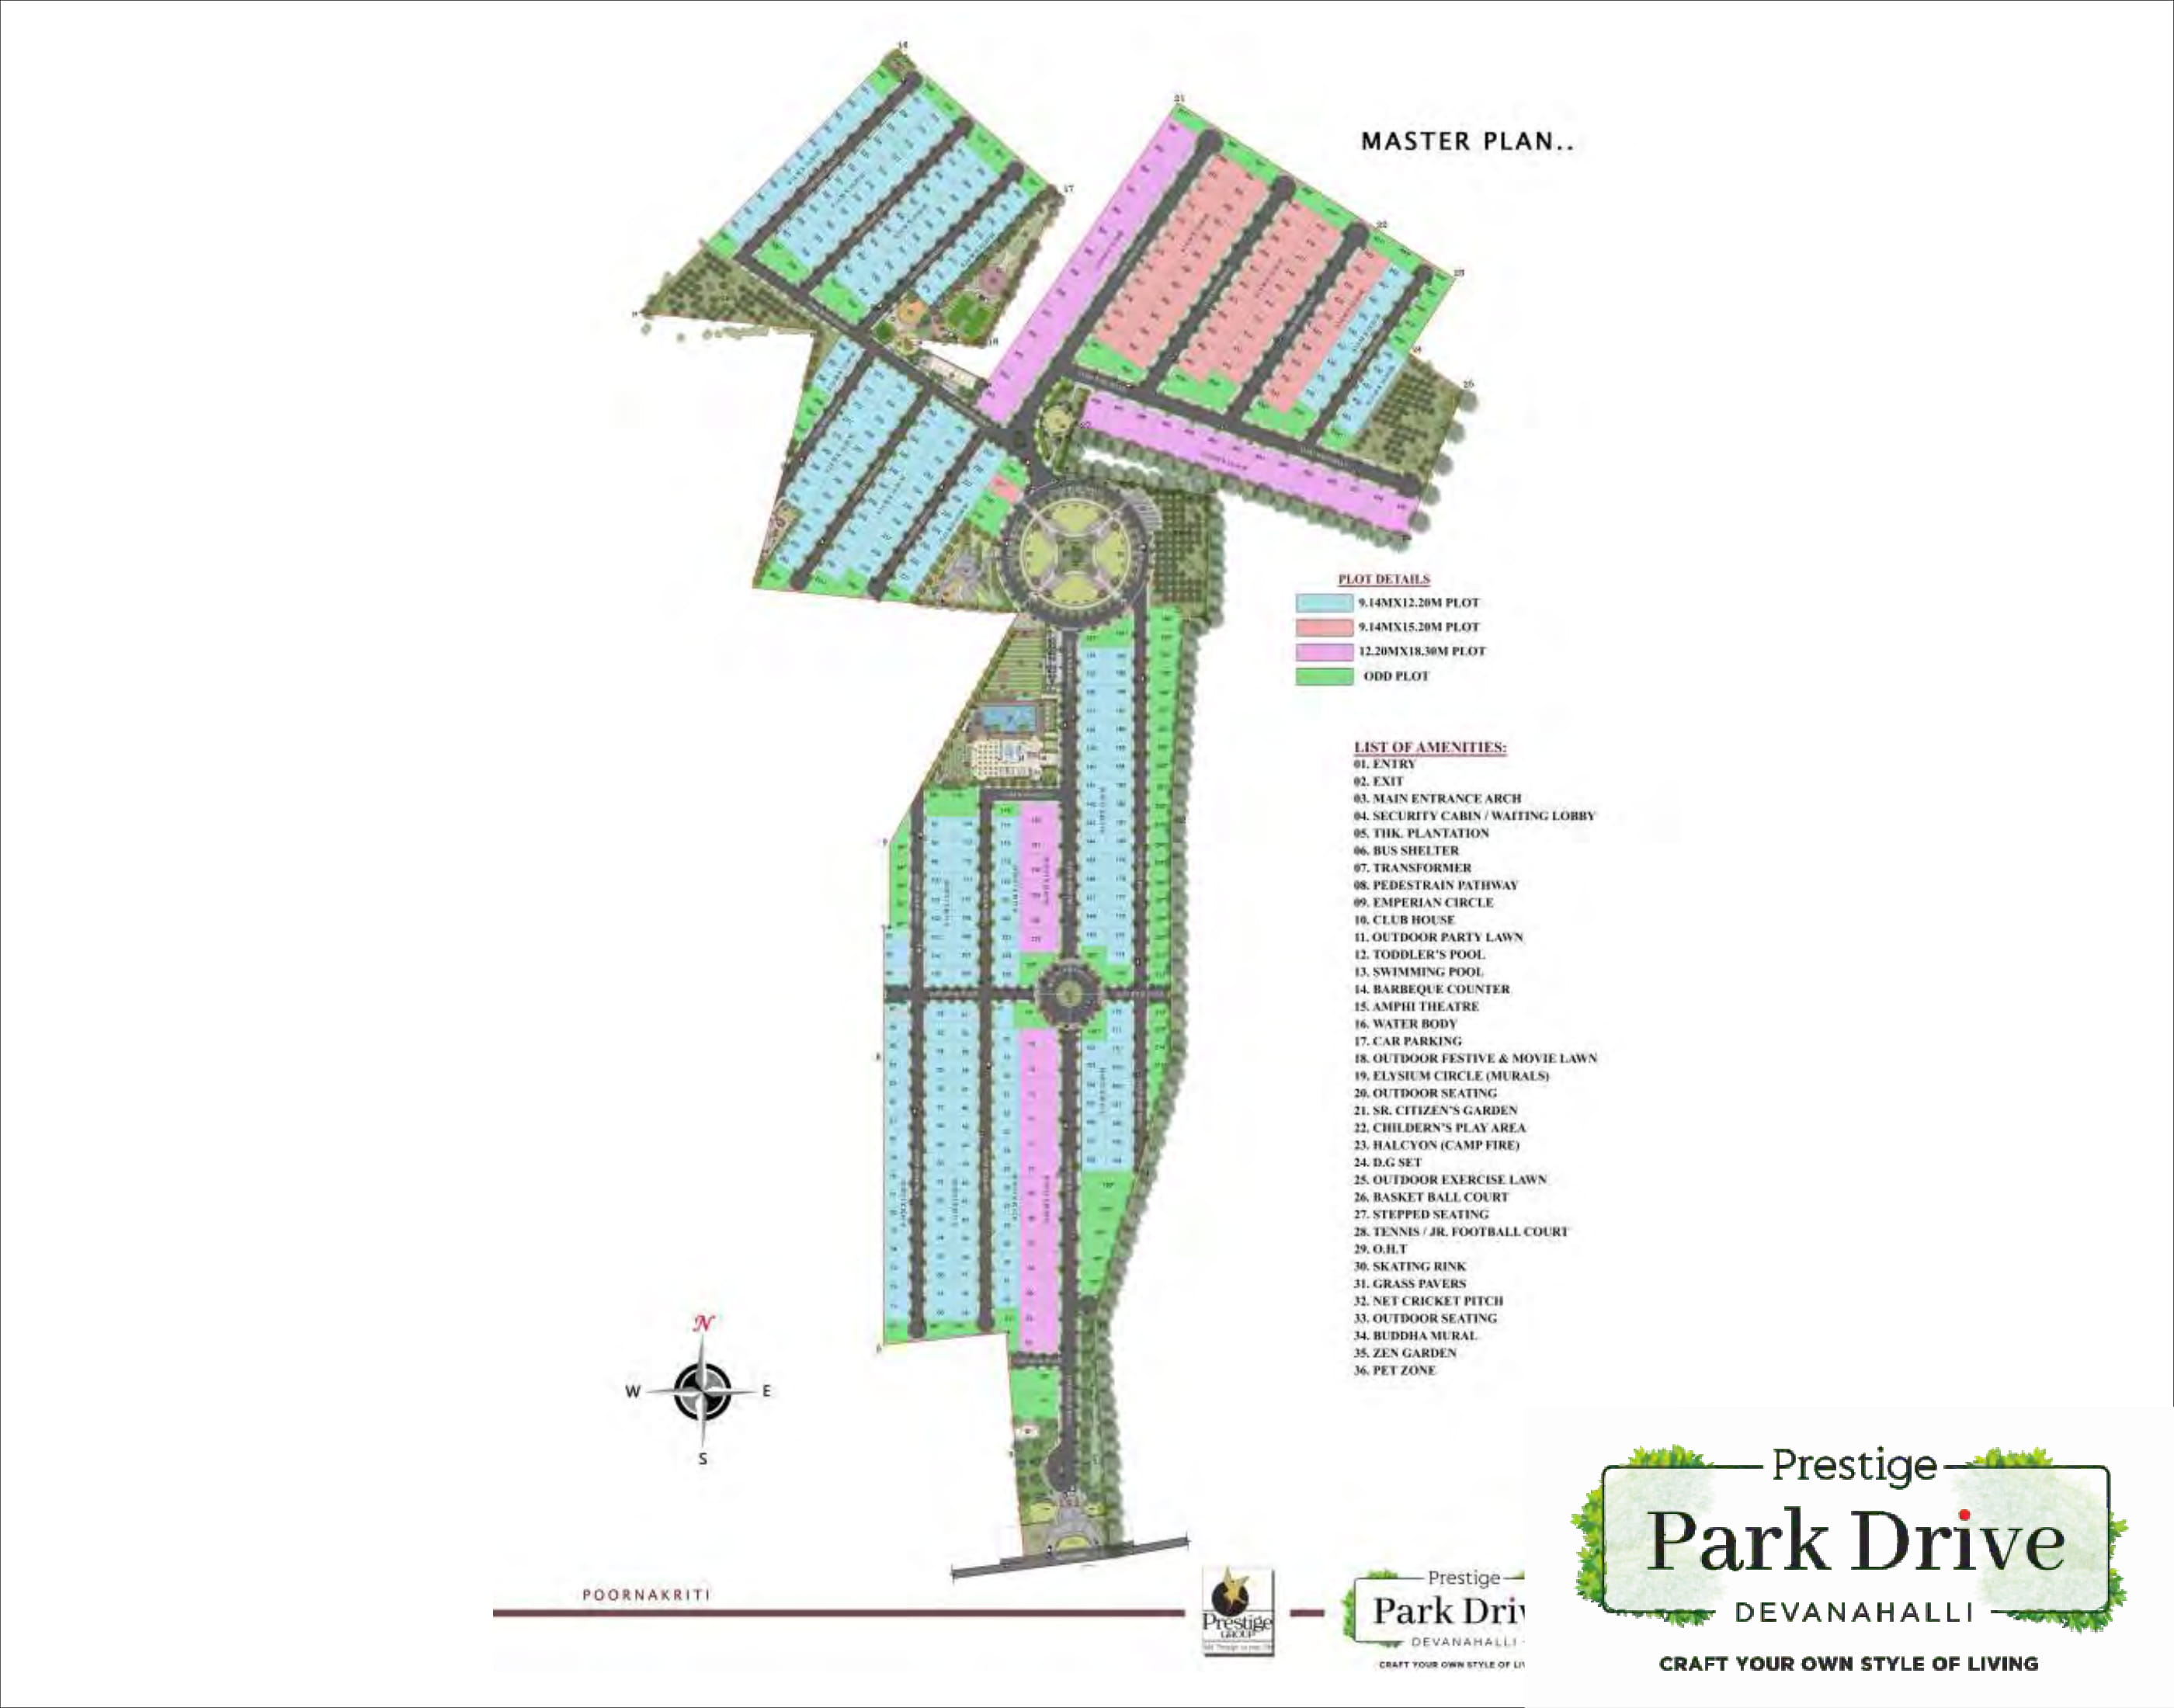 Prestige Park Drive Master Plan